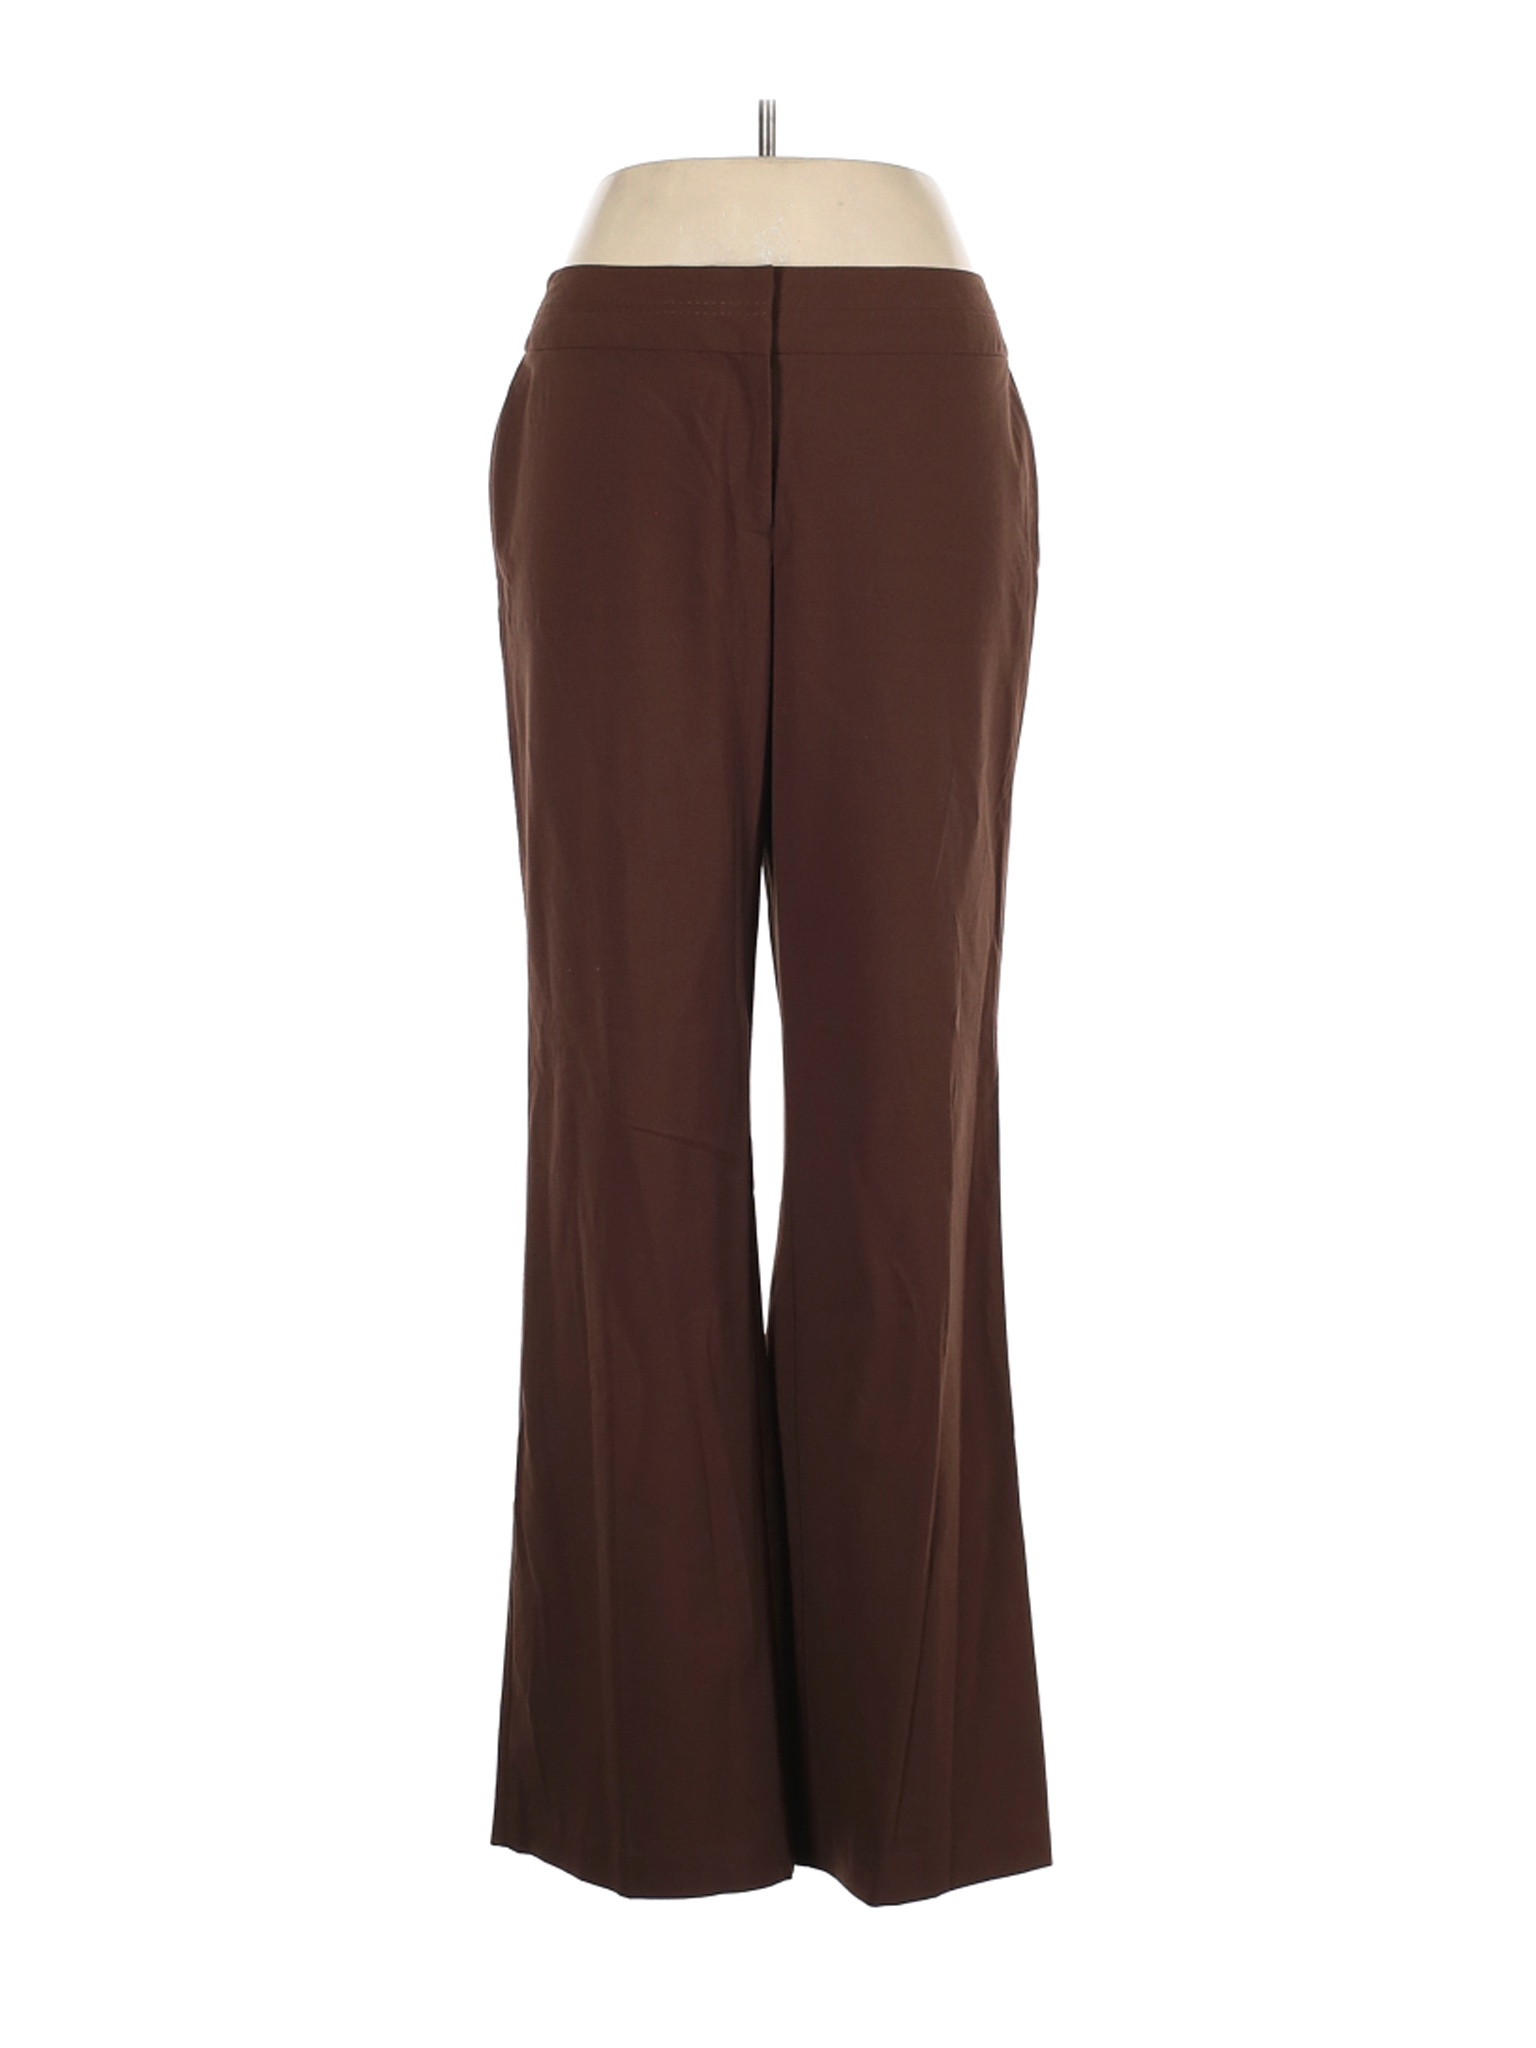 Worthington Women Brown Dress Pants 12 Tall | eBay